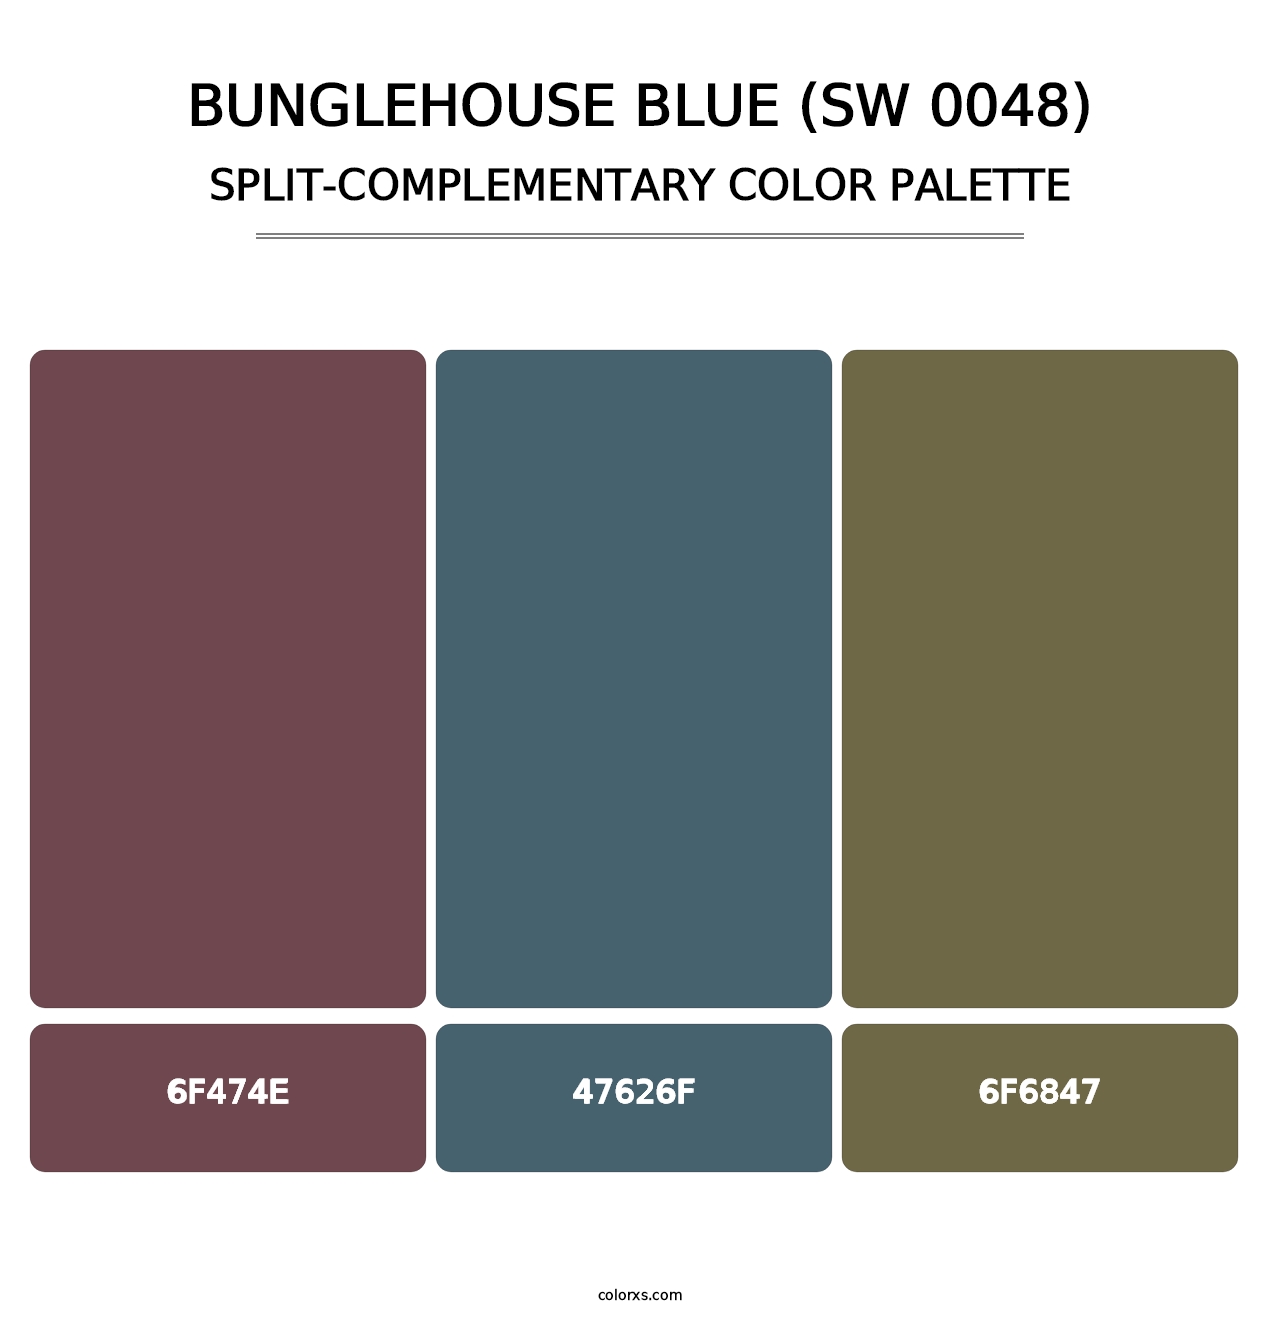 Bunglehouse Blue (SW 0048) - Split-Complementary Color Palette